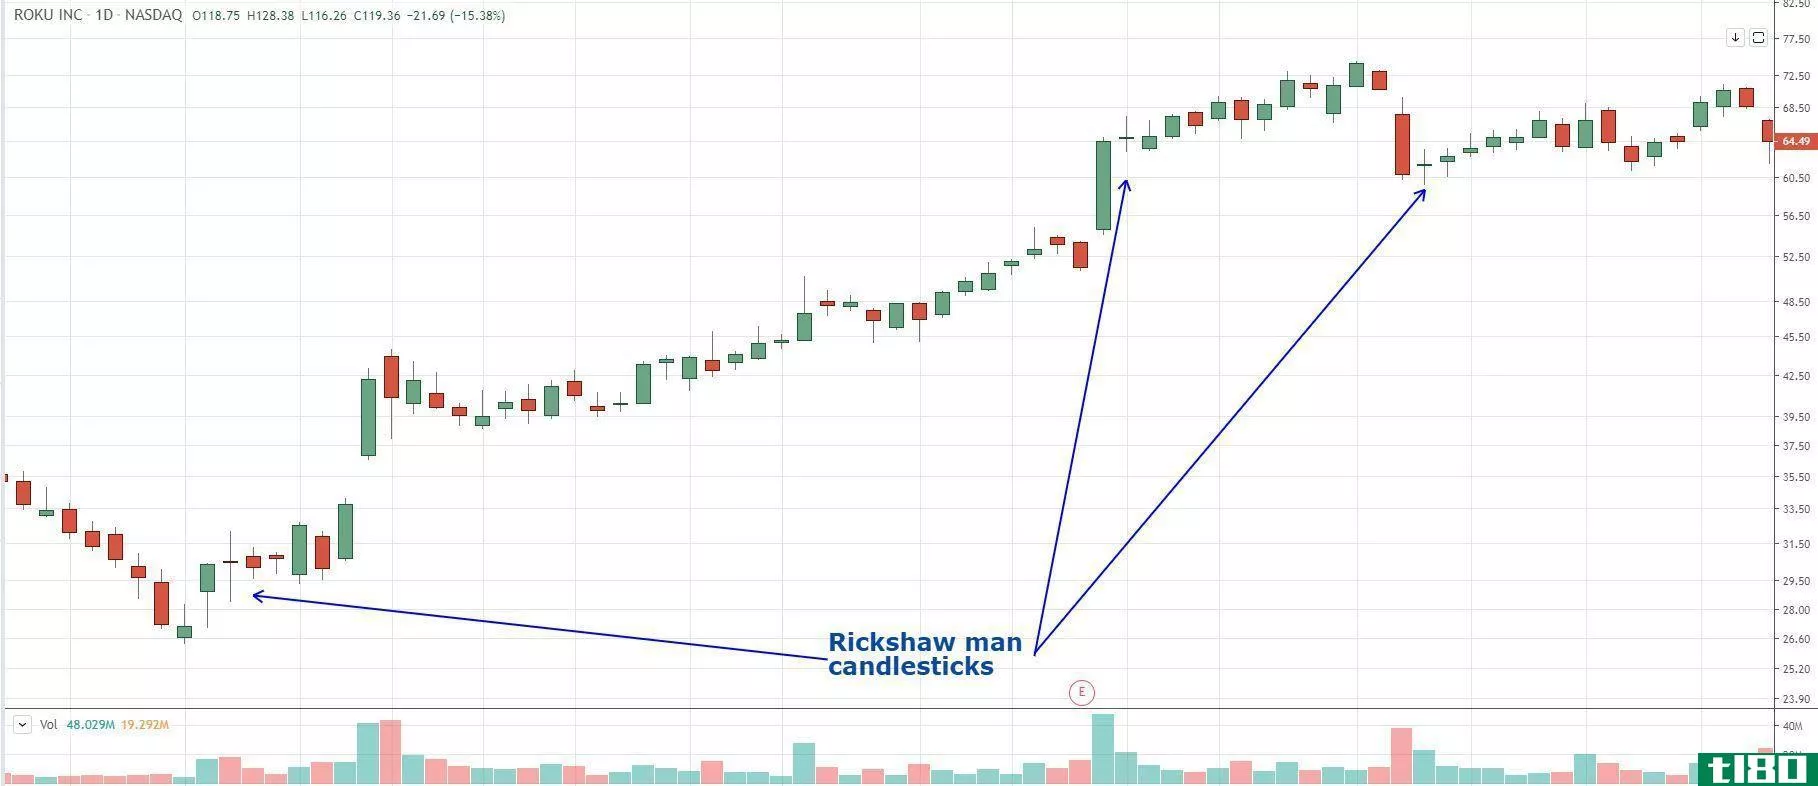 Rickshaw man candlestick pattern example on daily stock chart